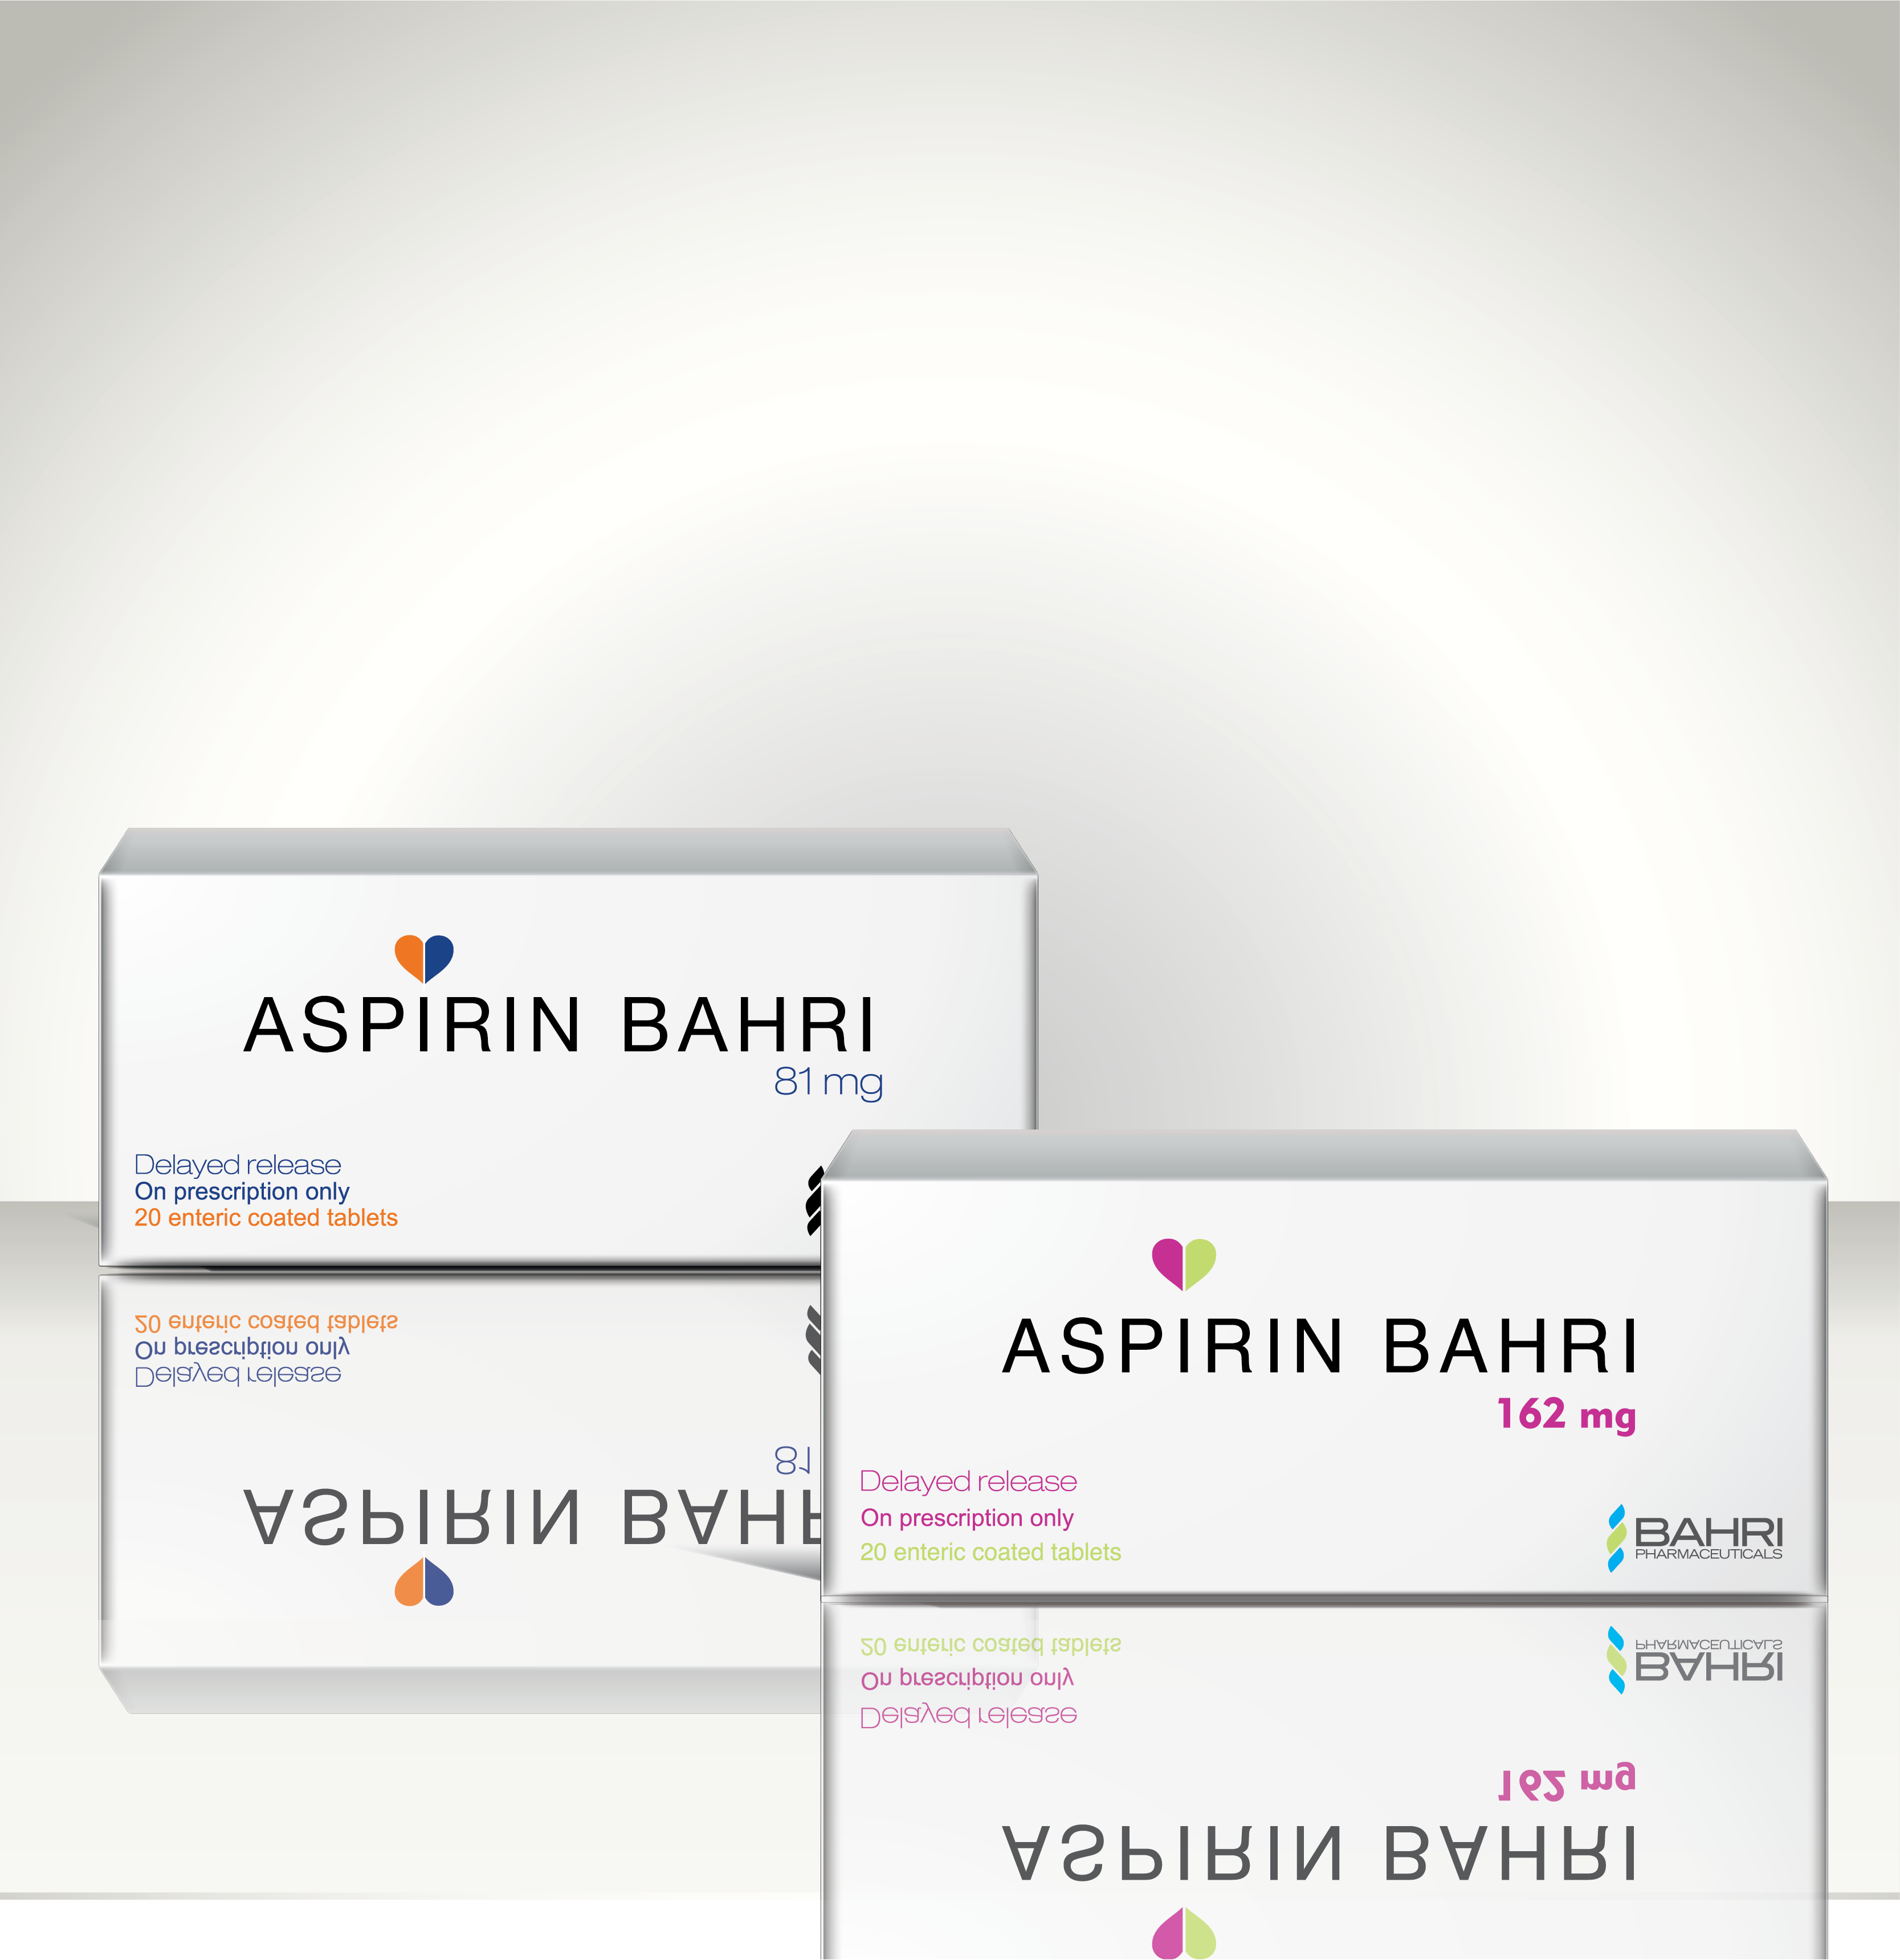 Aspirin Bahri